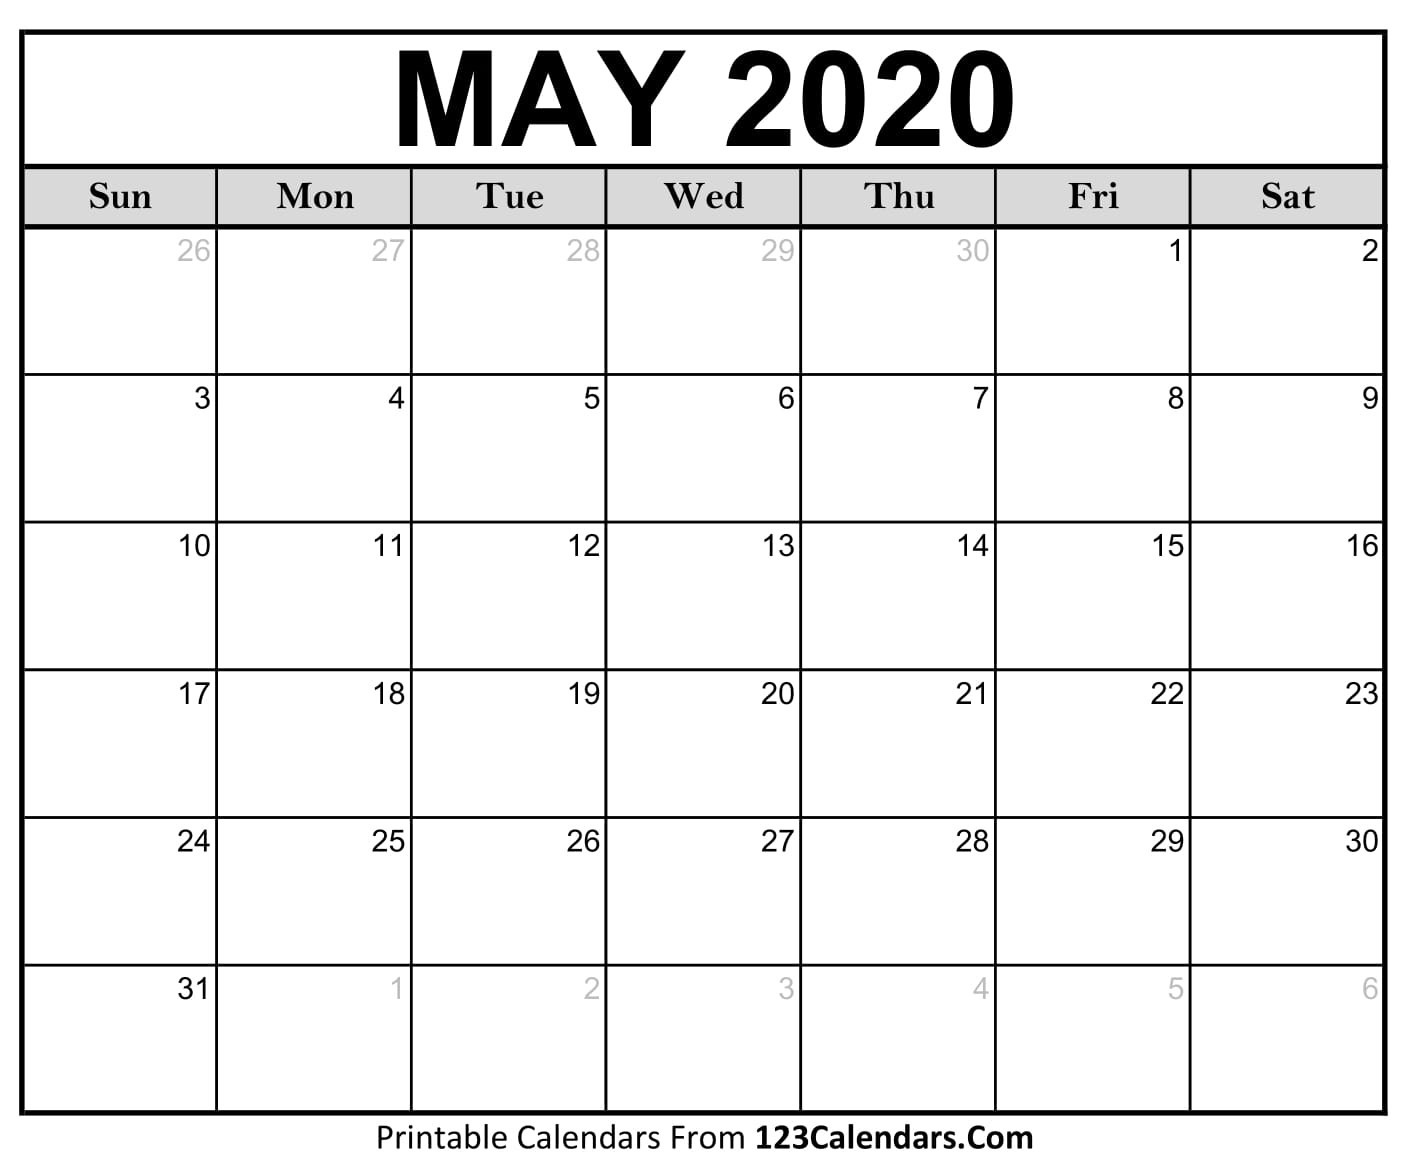 May 2020 Printable Calendar | 123Calendars-Calendar Summer 2020 Blank